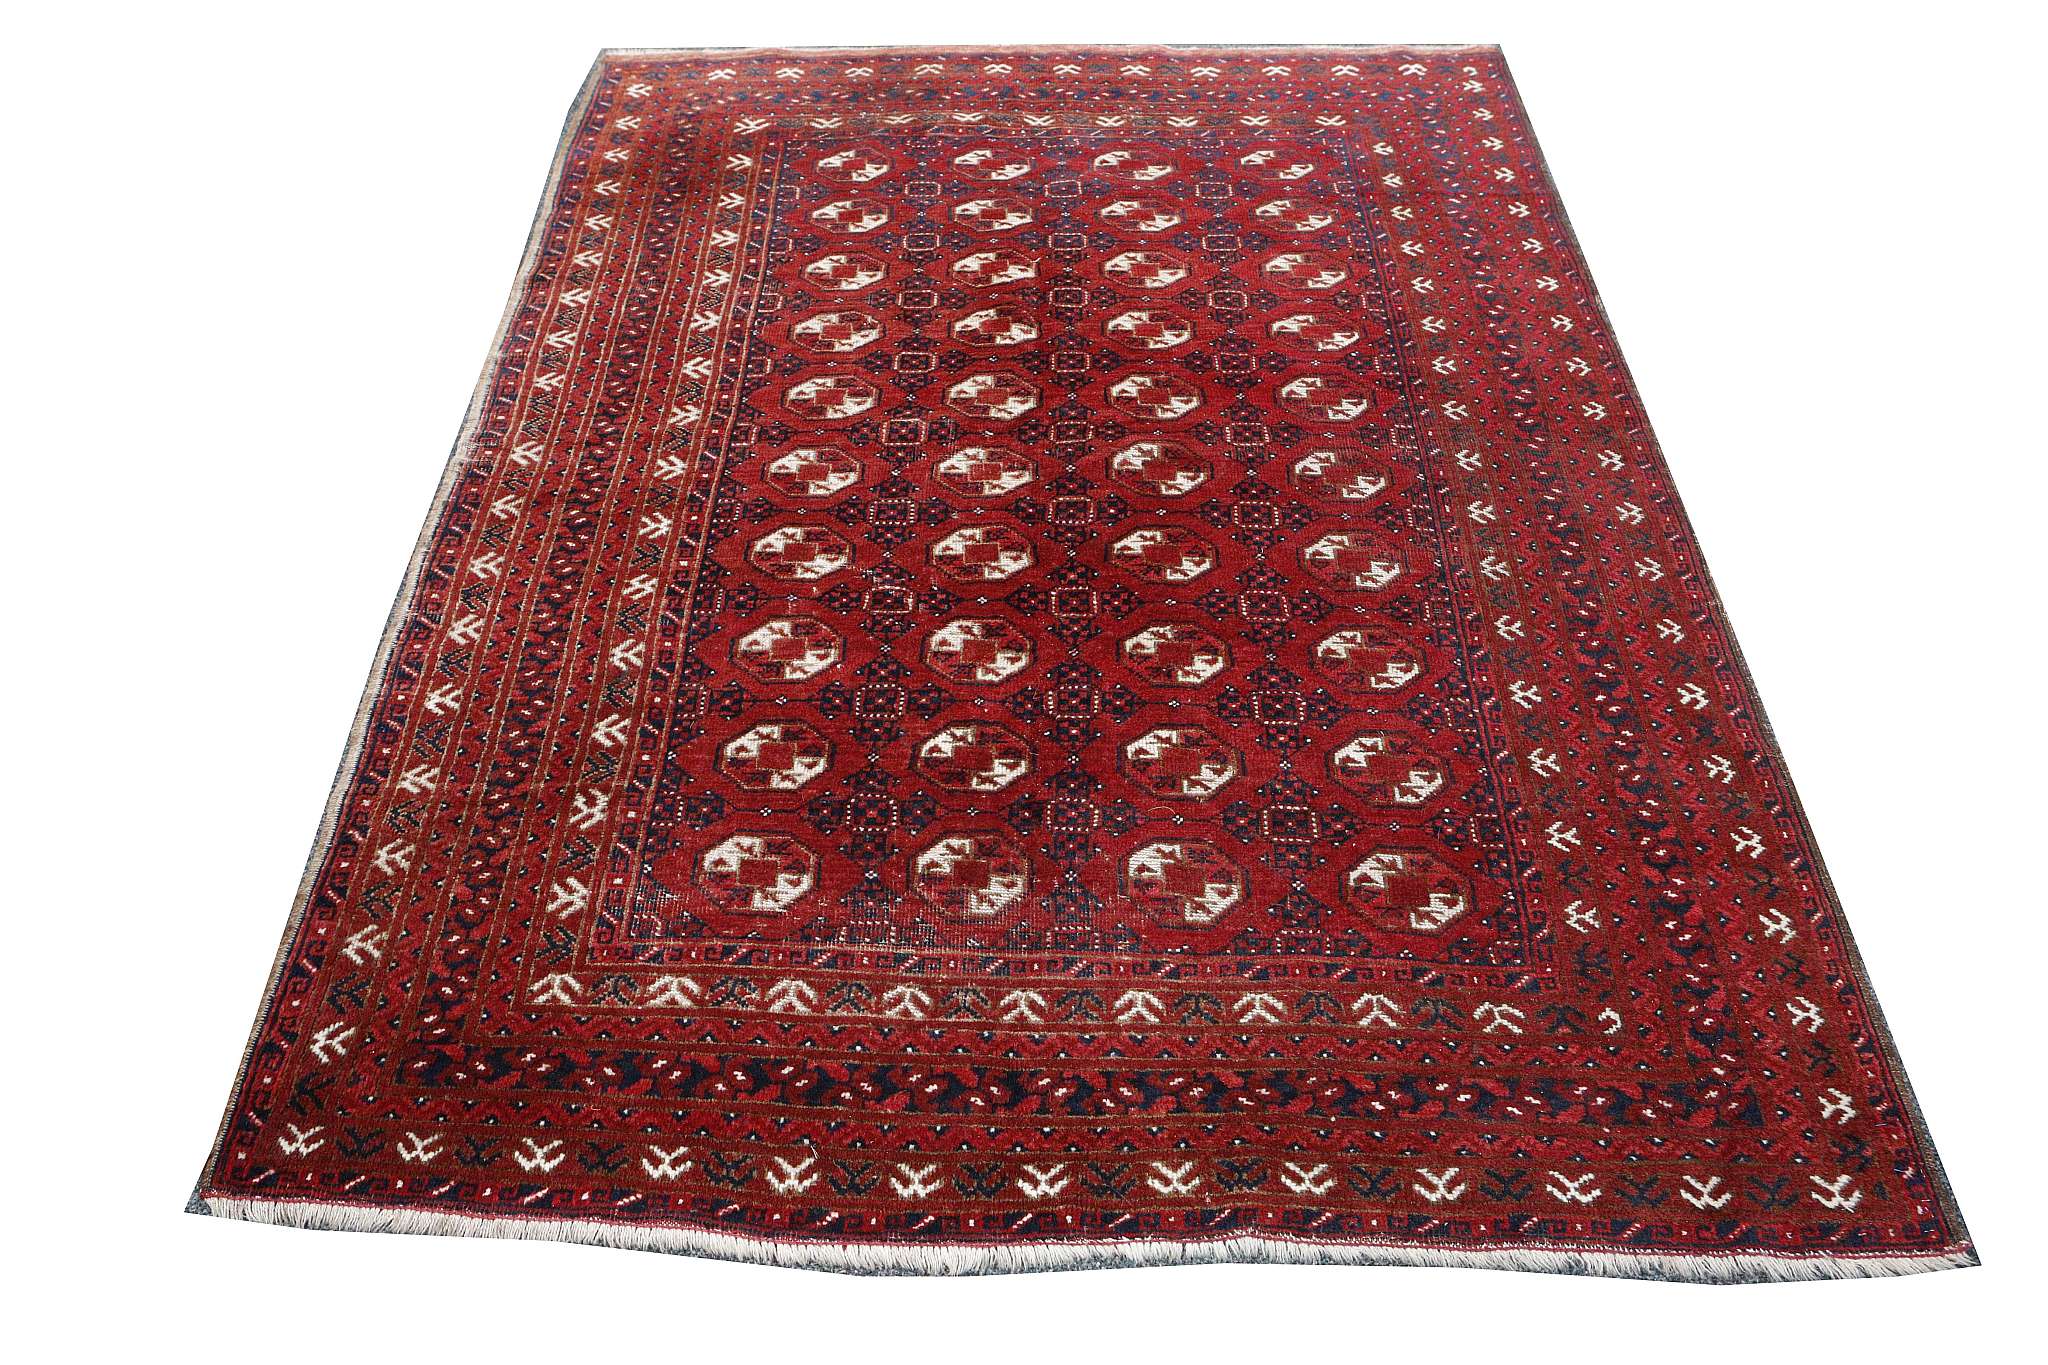 Afghan Bokhara rug, 2.12m x 1.54m, condition ratin